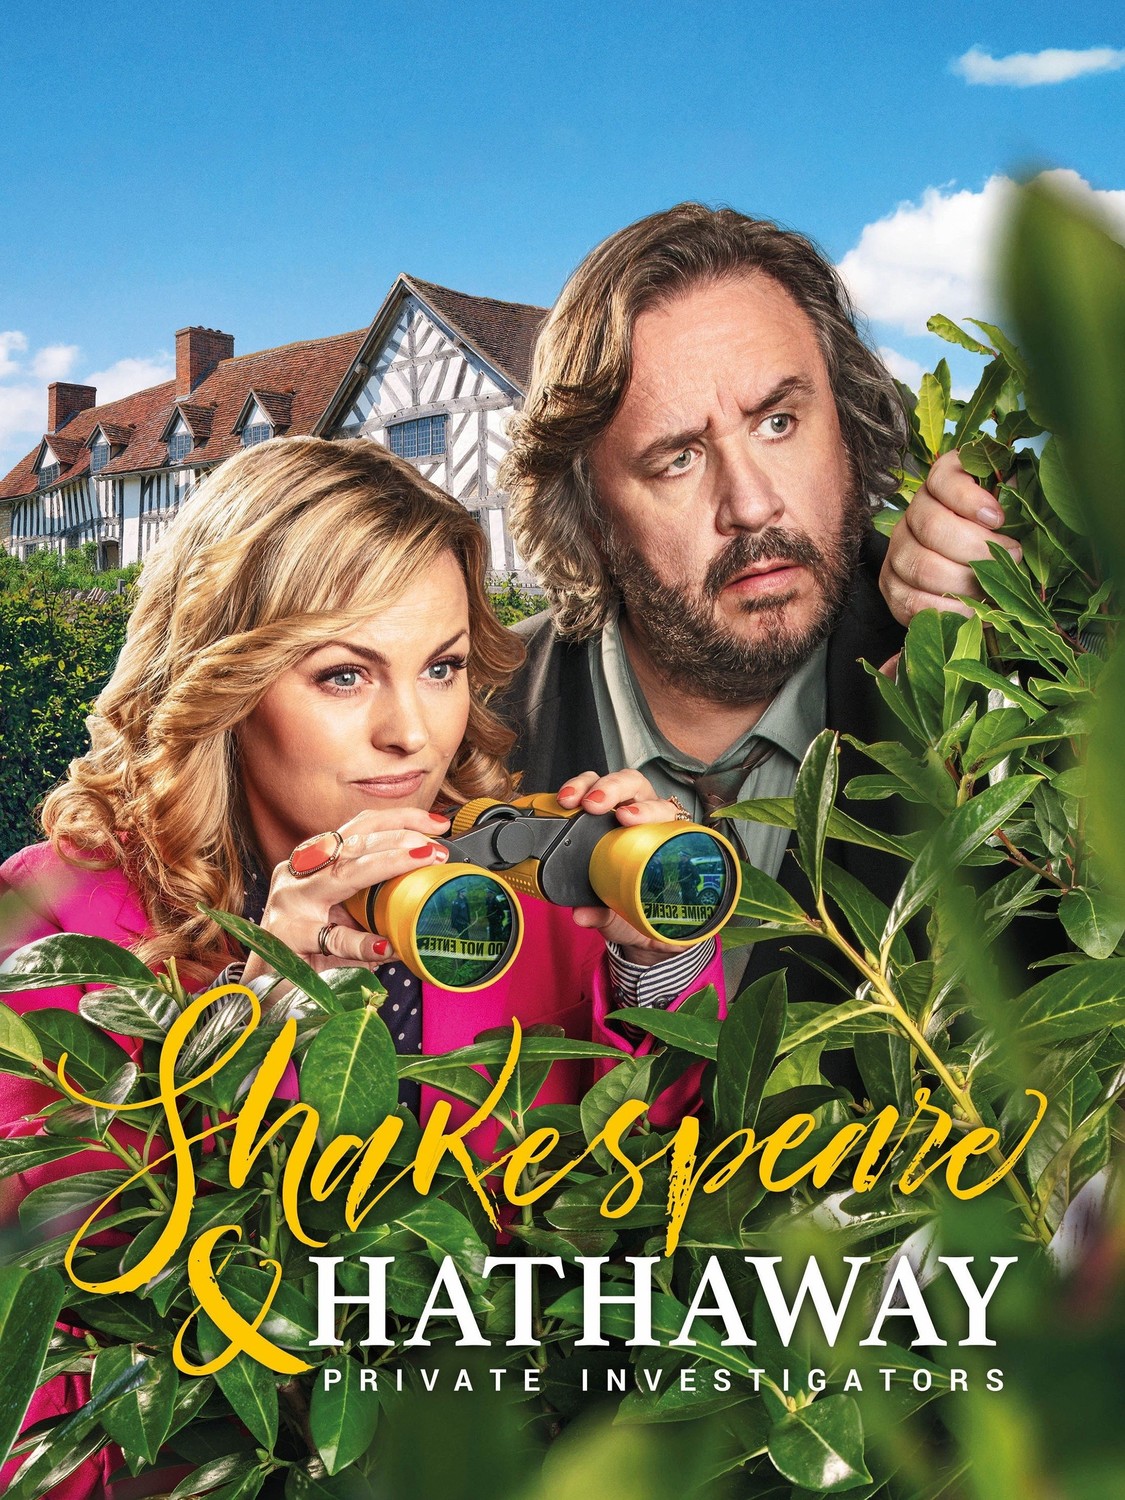 Shakespeare & Hathaway - Private Investigators (2018)